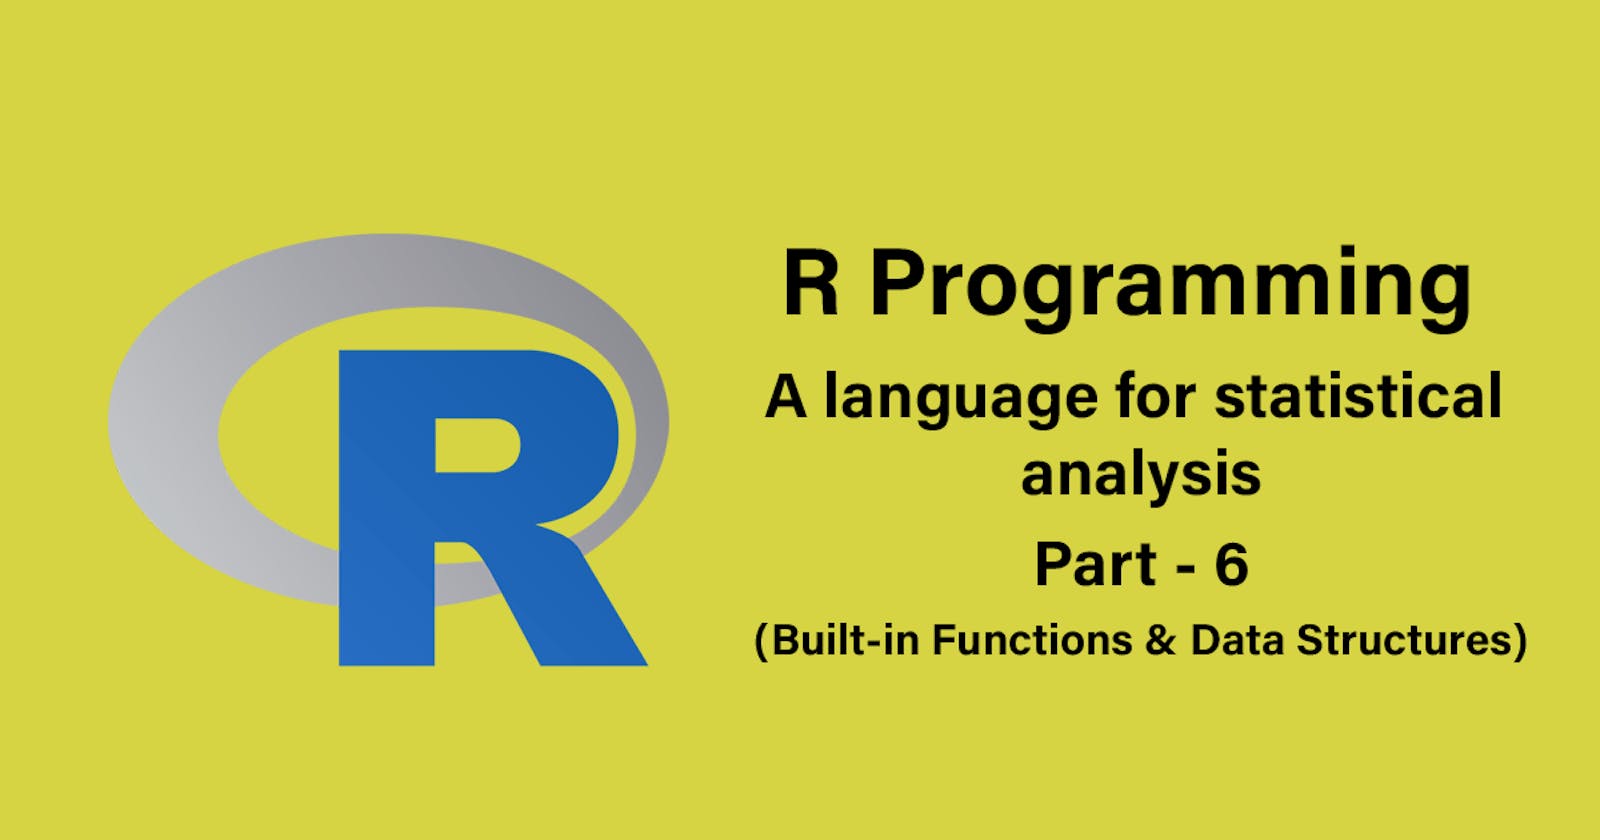 R programming - Built-in Functions